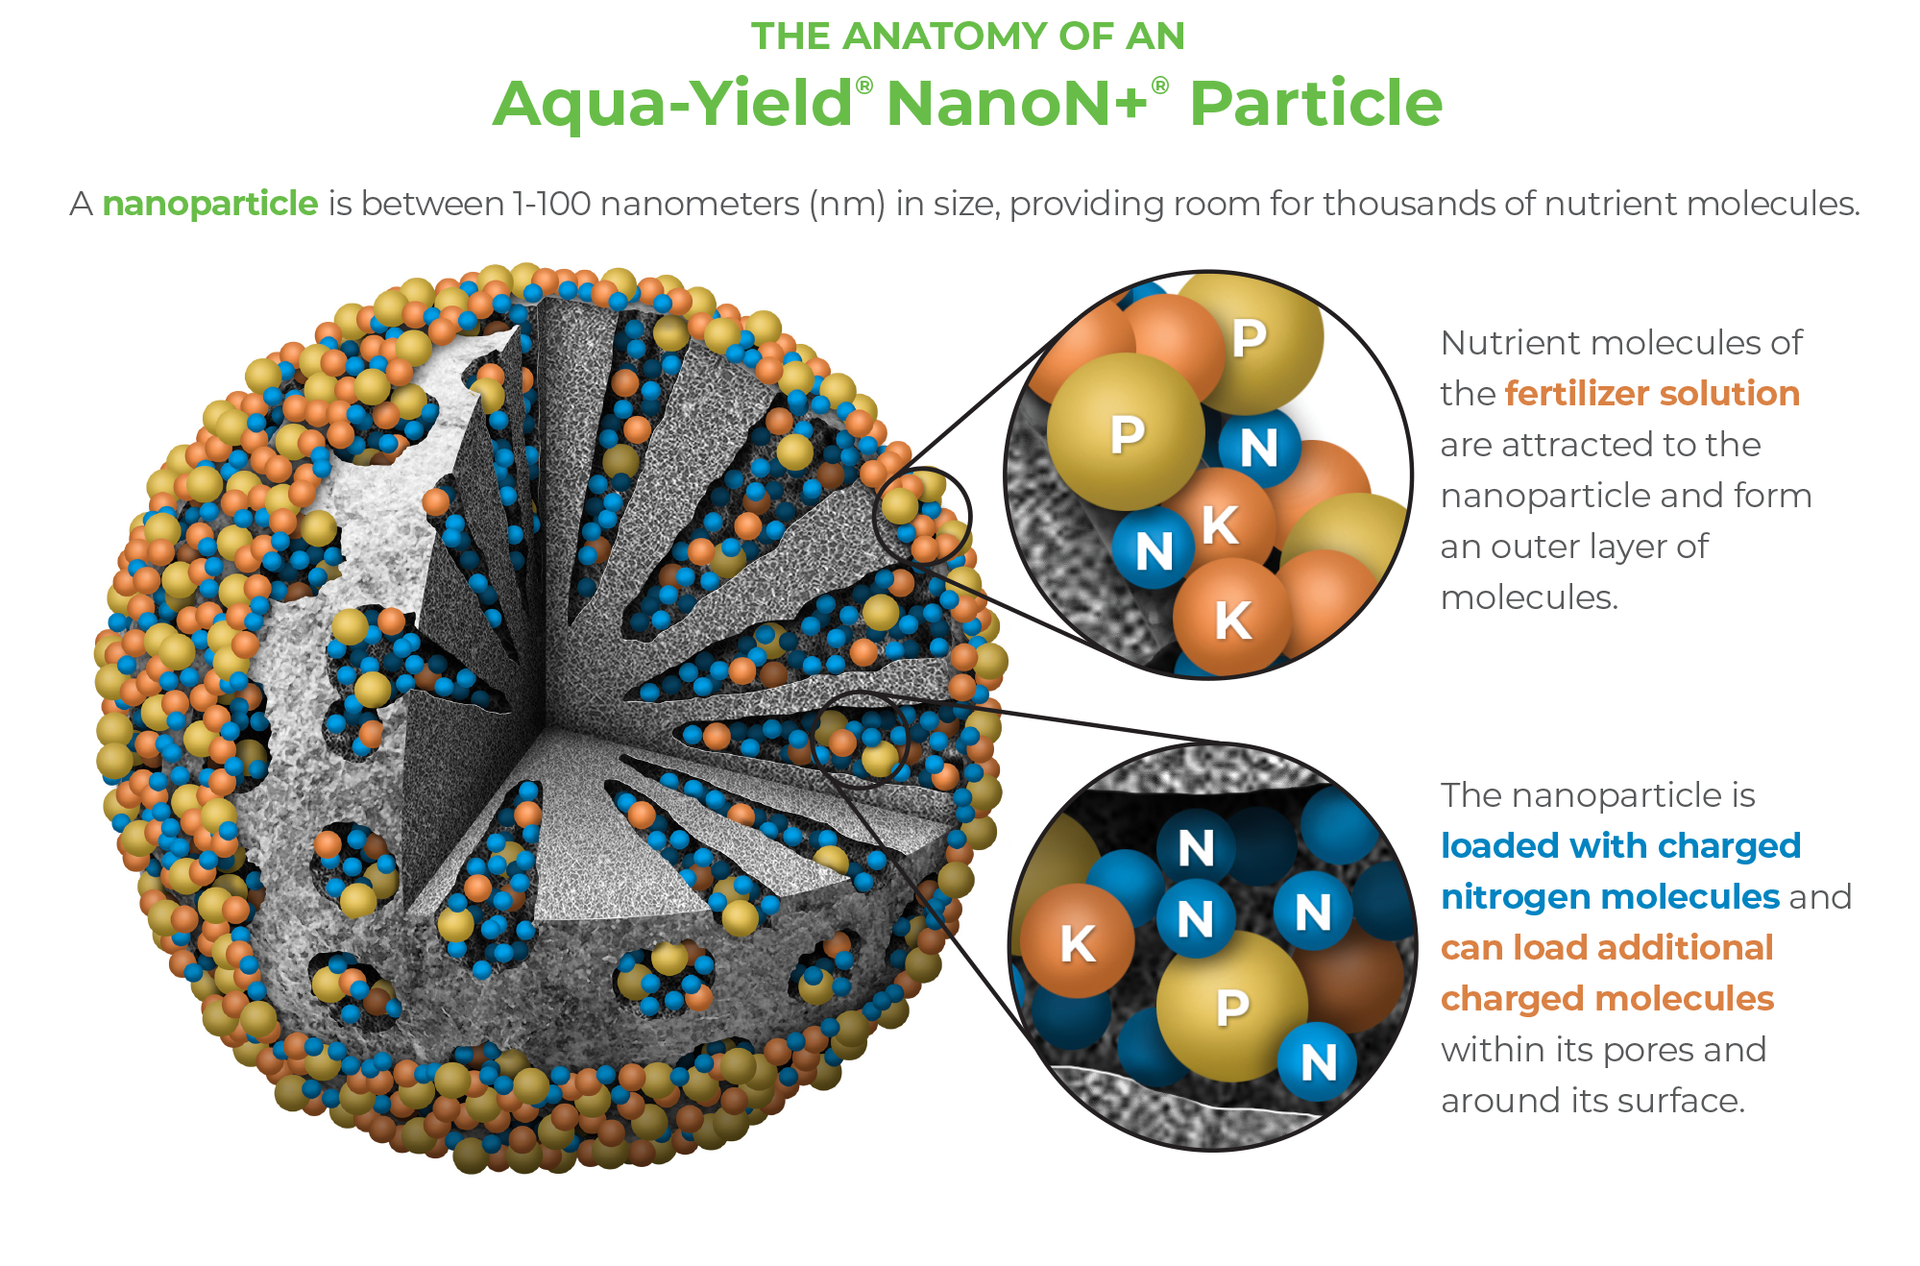 Aqua-Yield NanoN+ Particle